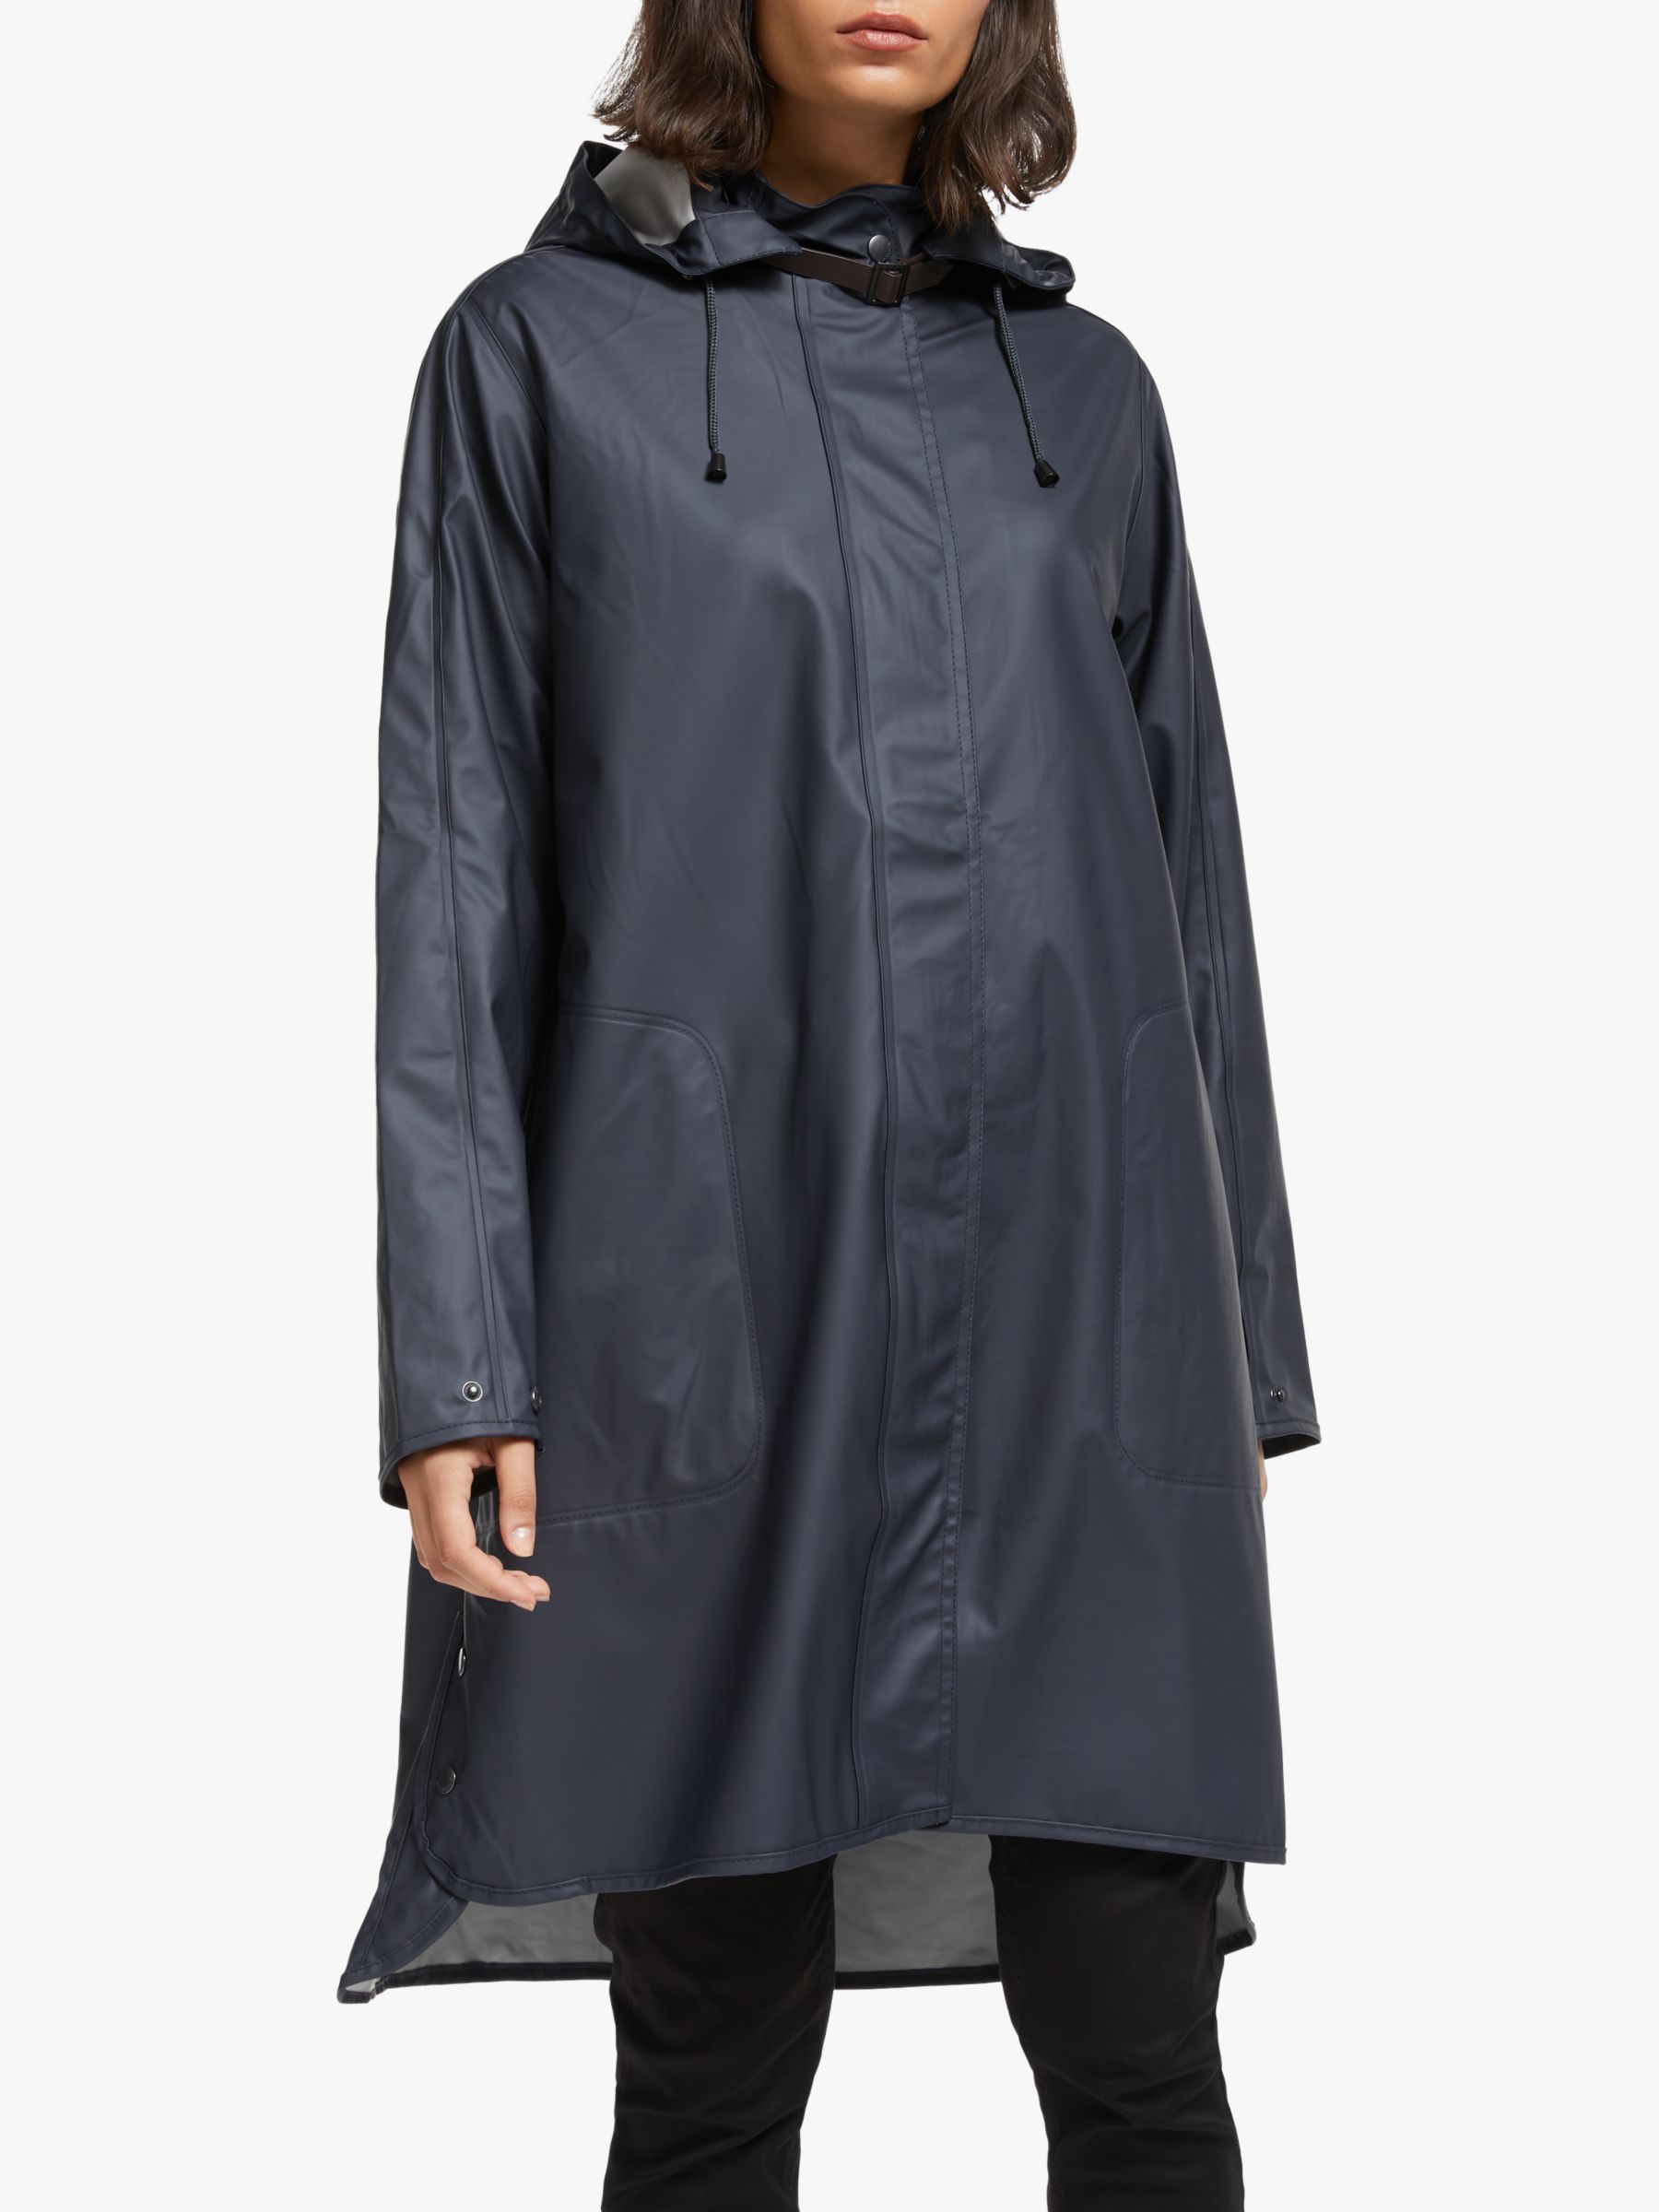 Ilse Jacobsen Hornbæk Raincoat, Dark Indigo at John Lewis & Partners